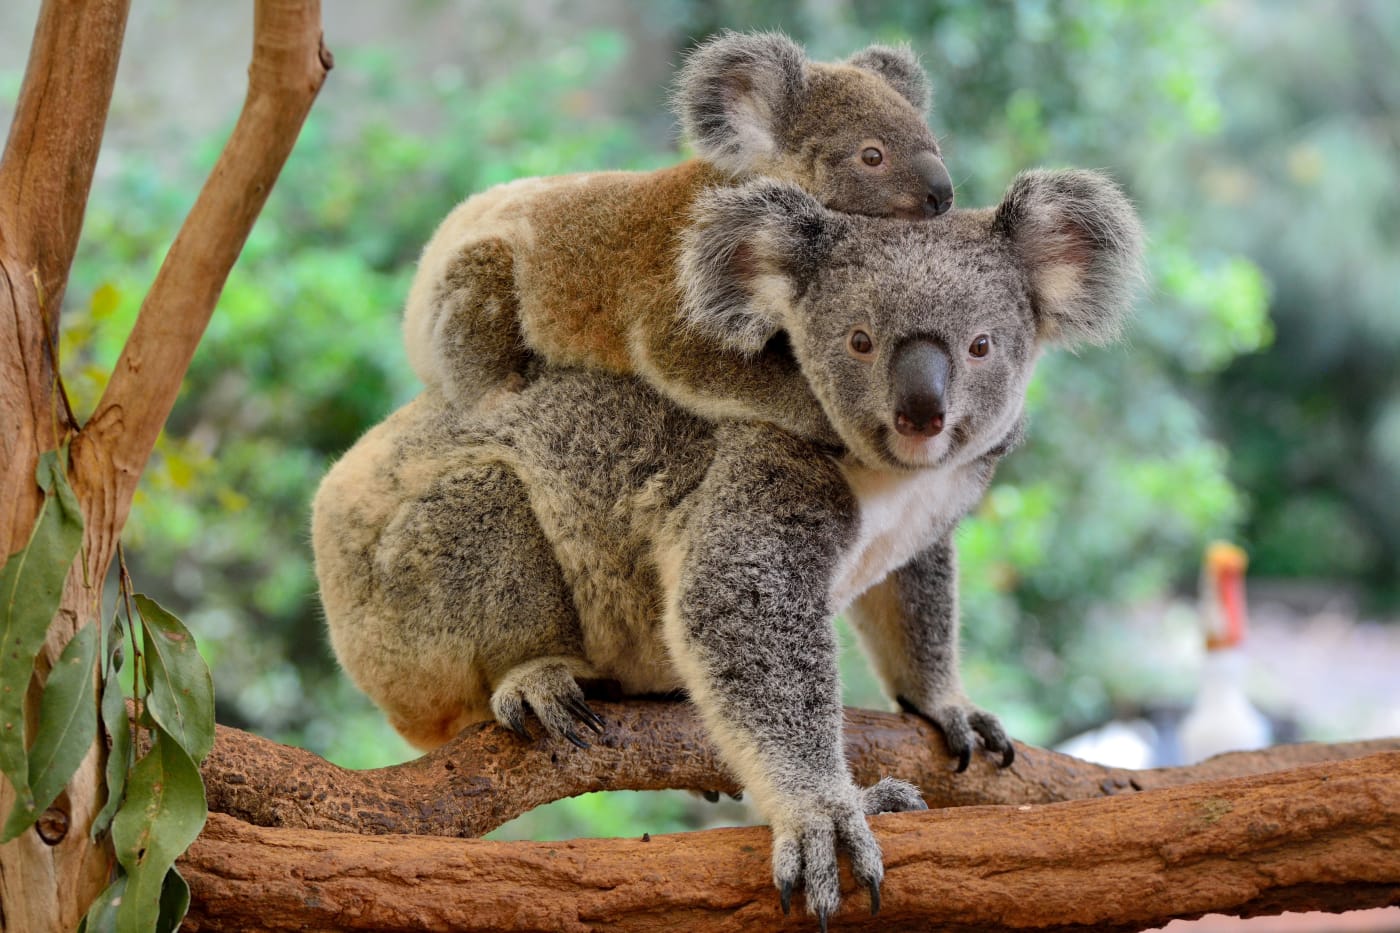 Mother koala with joey on her back